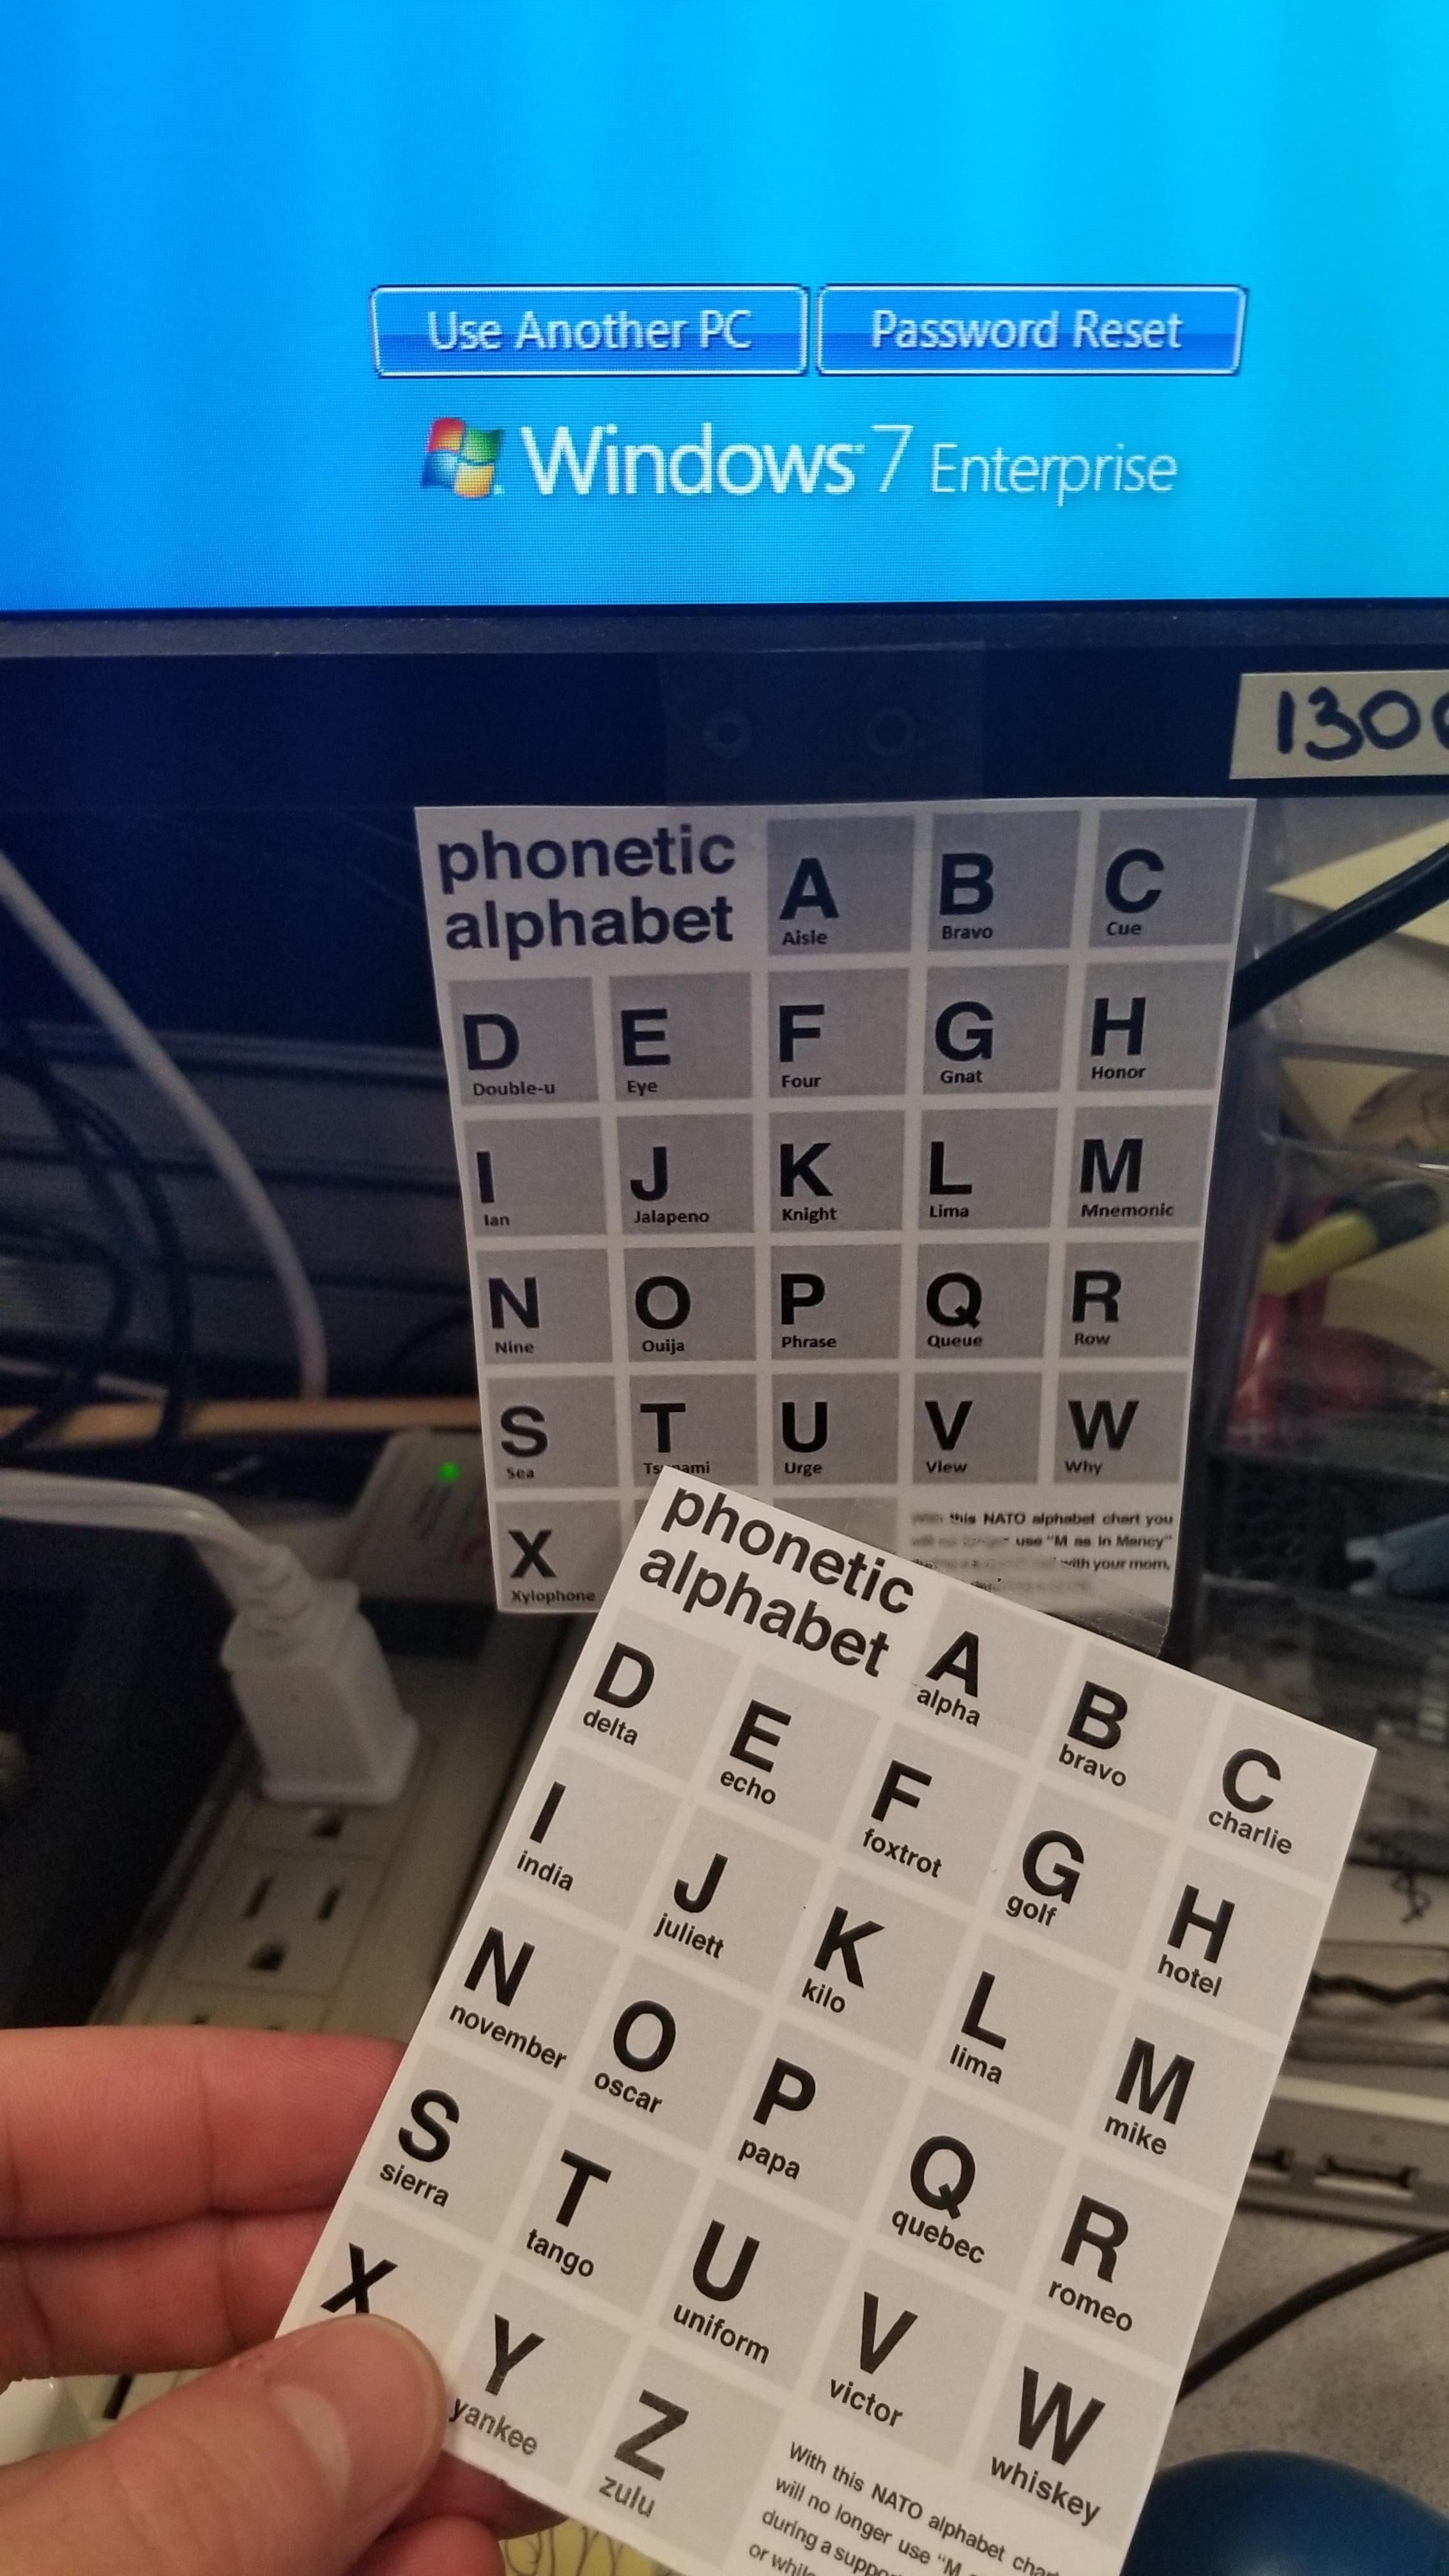 Classic - replacing someone’s cheat sheet phonetic alphabet